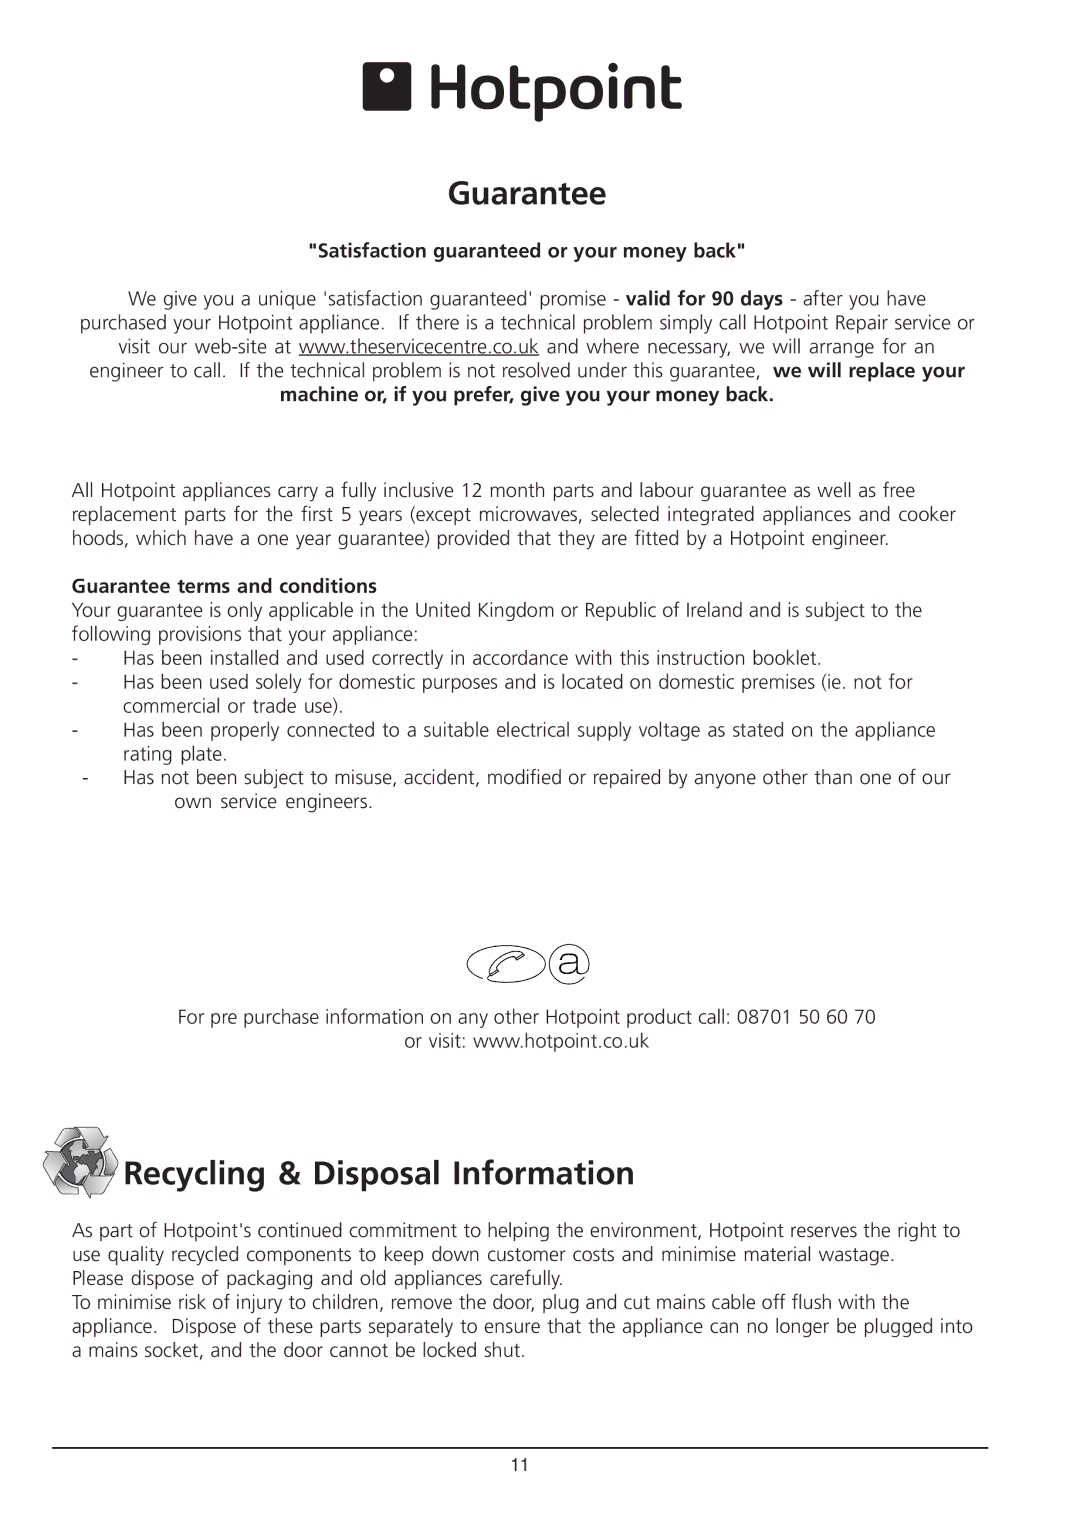 Hotpoint RLA 21 manual Guarantee, Recycling & Disposal Information, Satisfaction guaranteed or your money back 